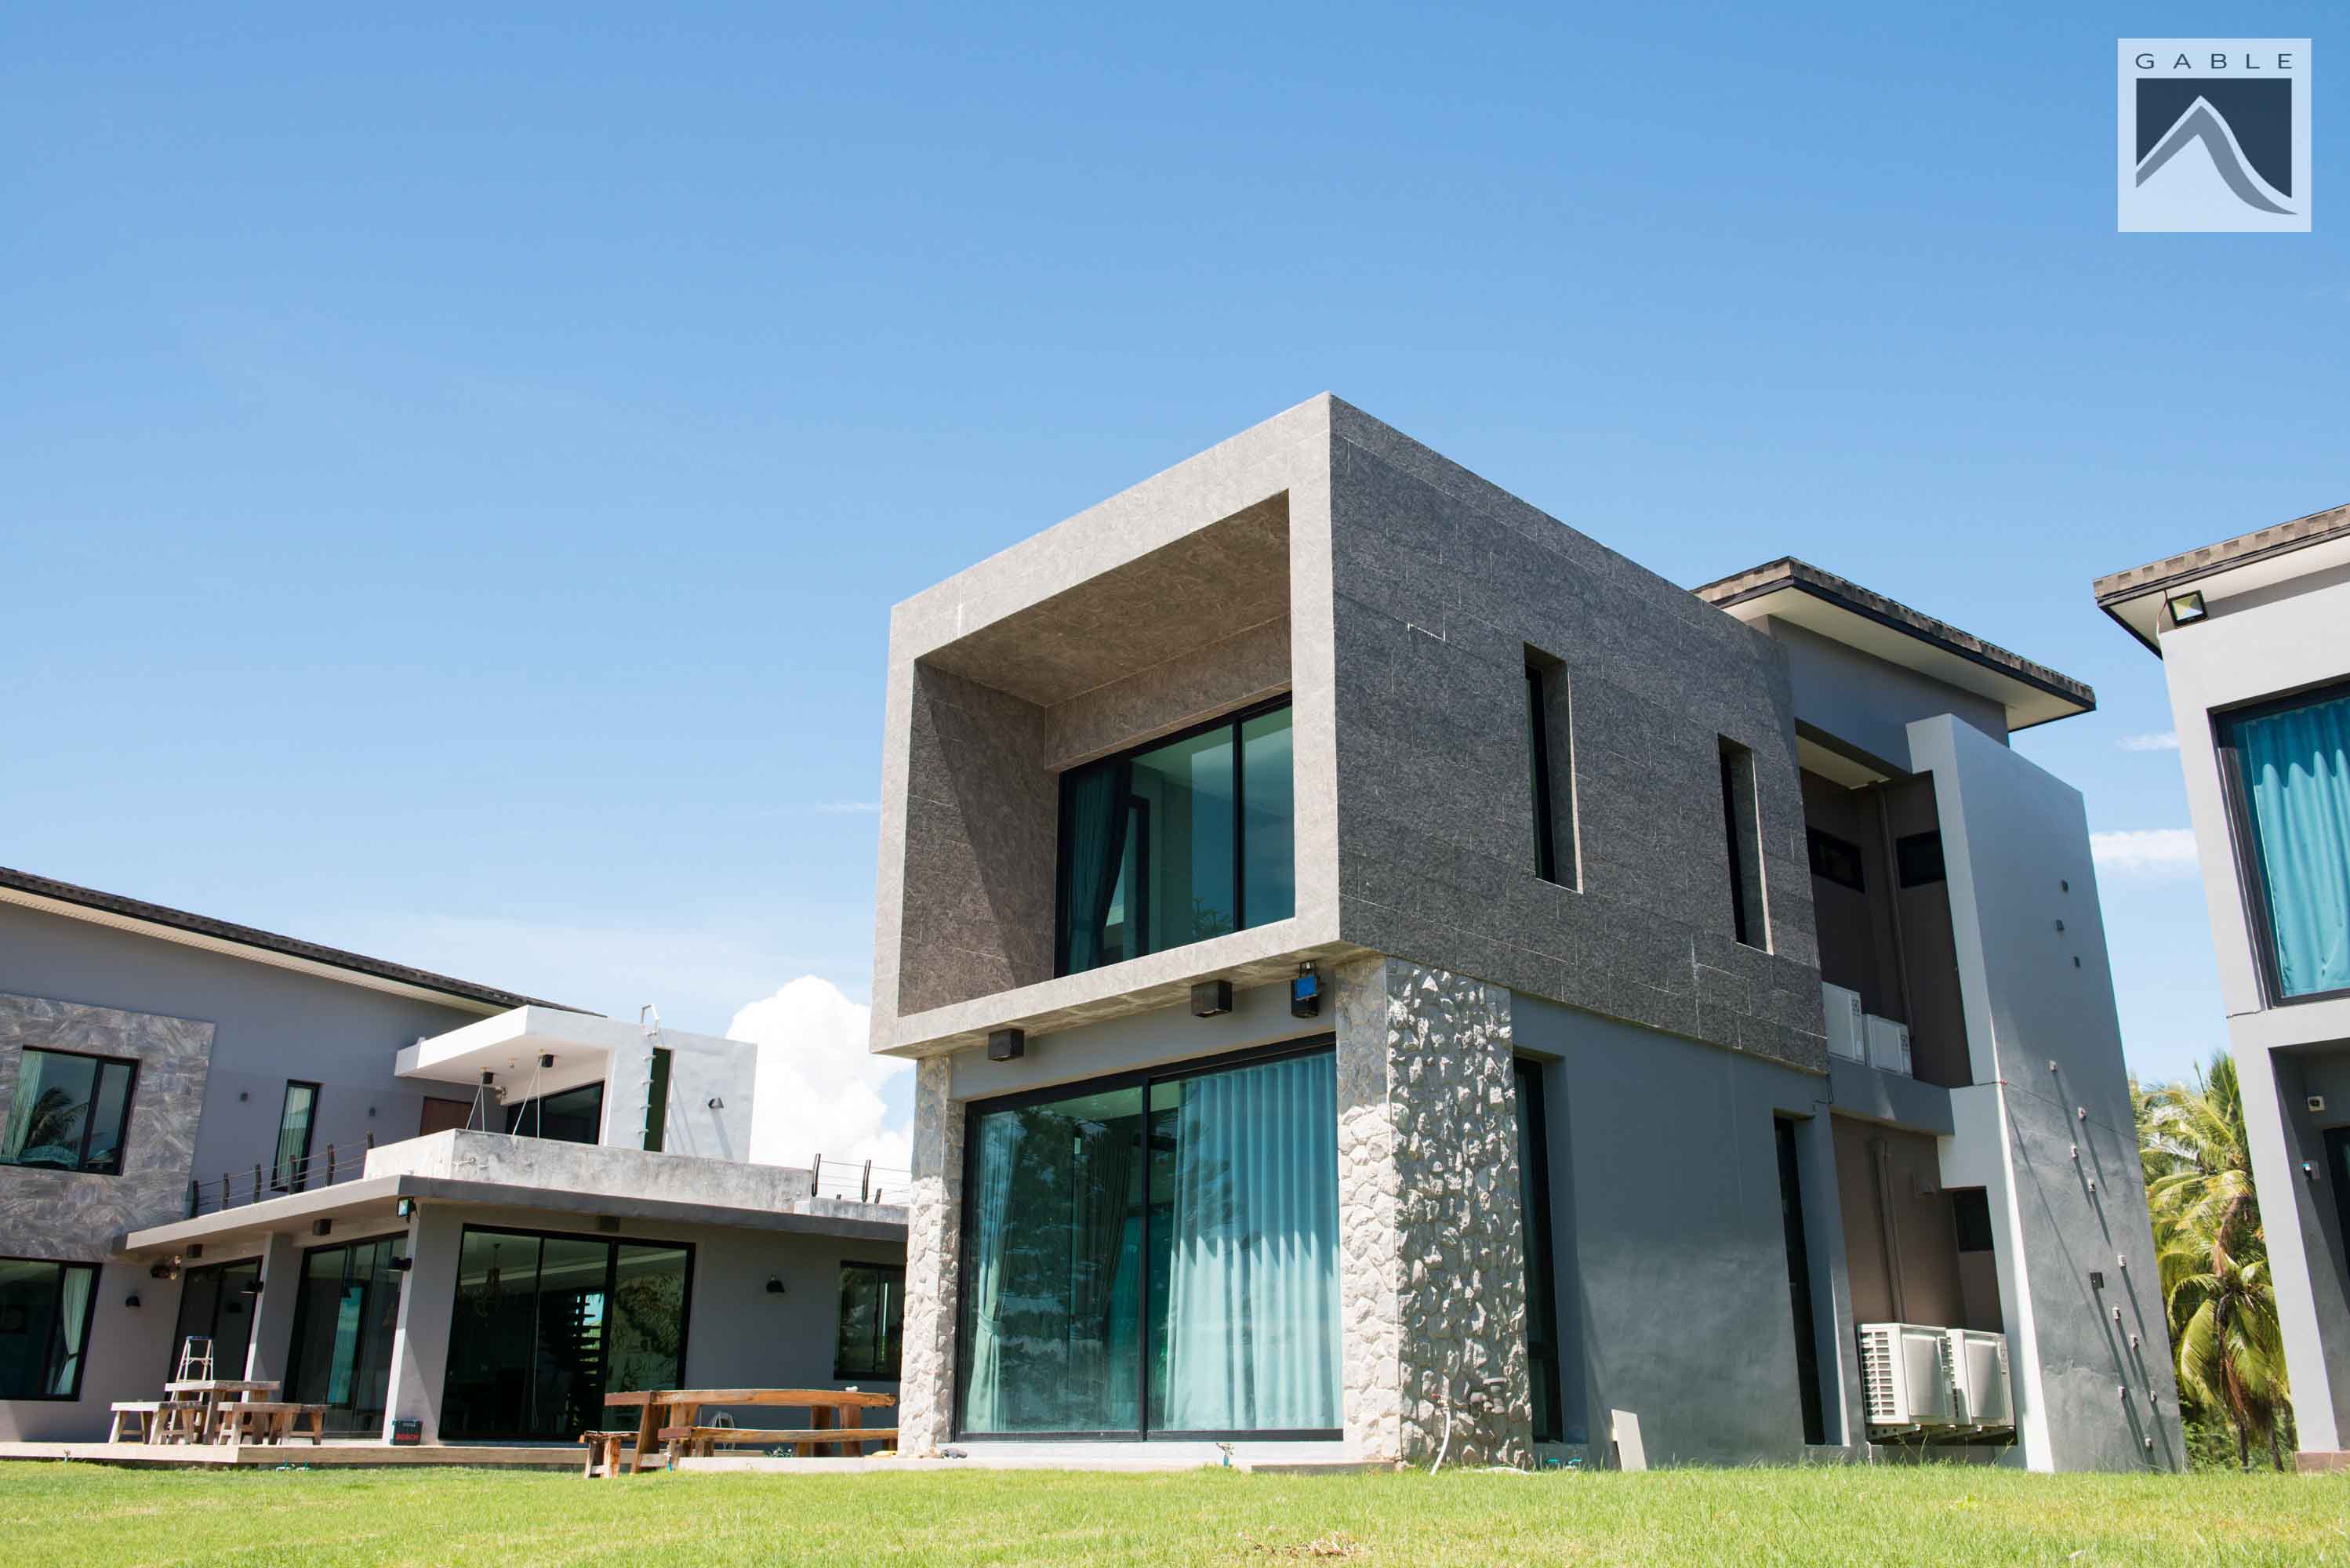 PROJECT บ้านริมทะเล บ่อนอก ประจวบคีรีขันธ์ Gable group รับออกแบบ สร้างบ้าน ตกแต่งภายใน สถาปัตยกรรม